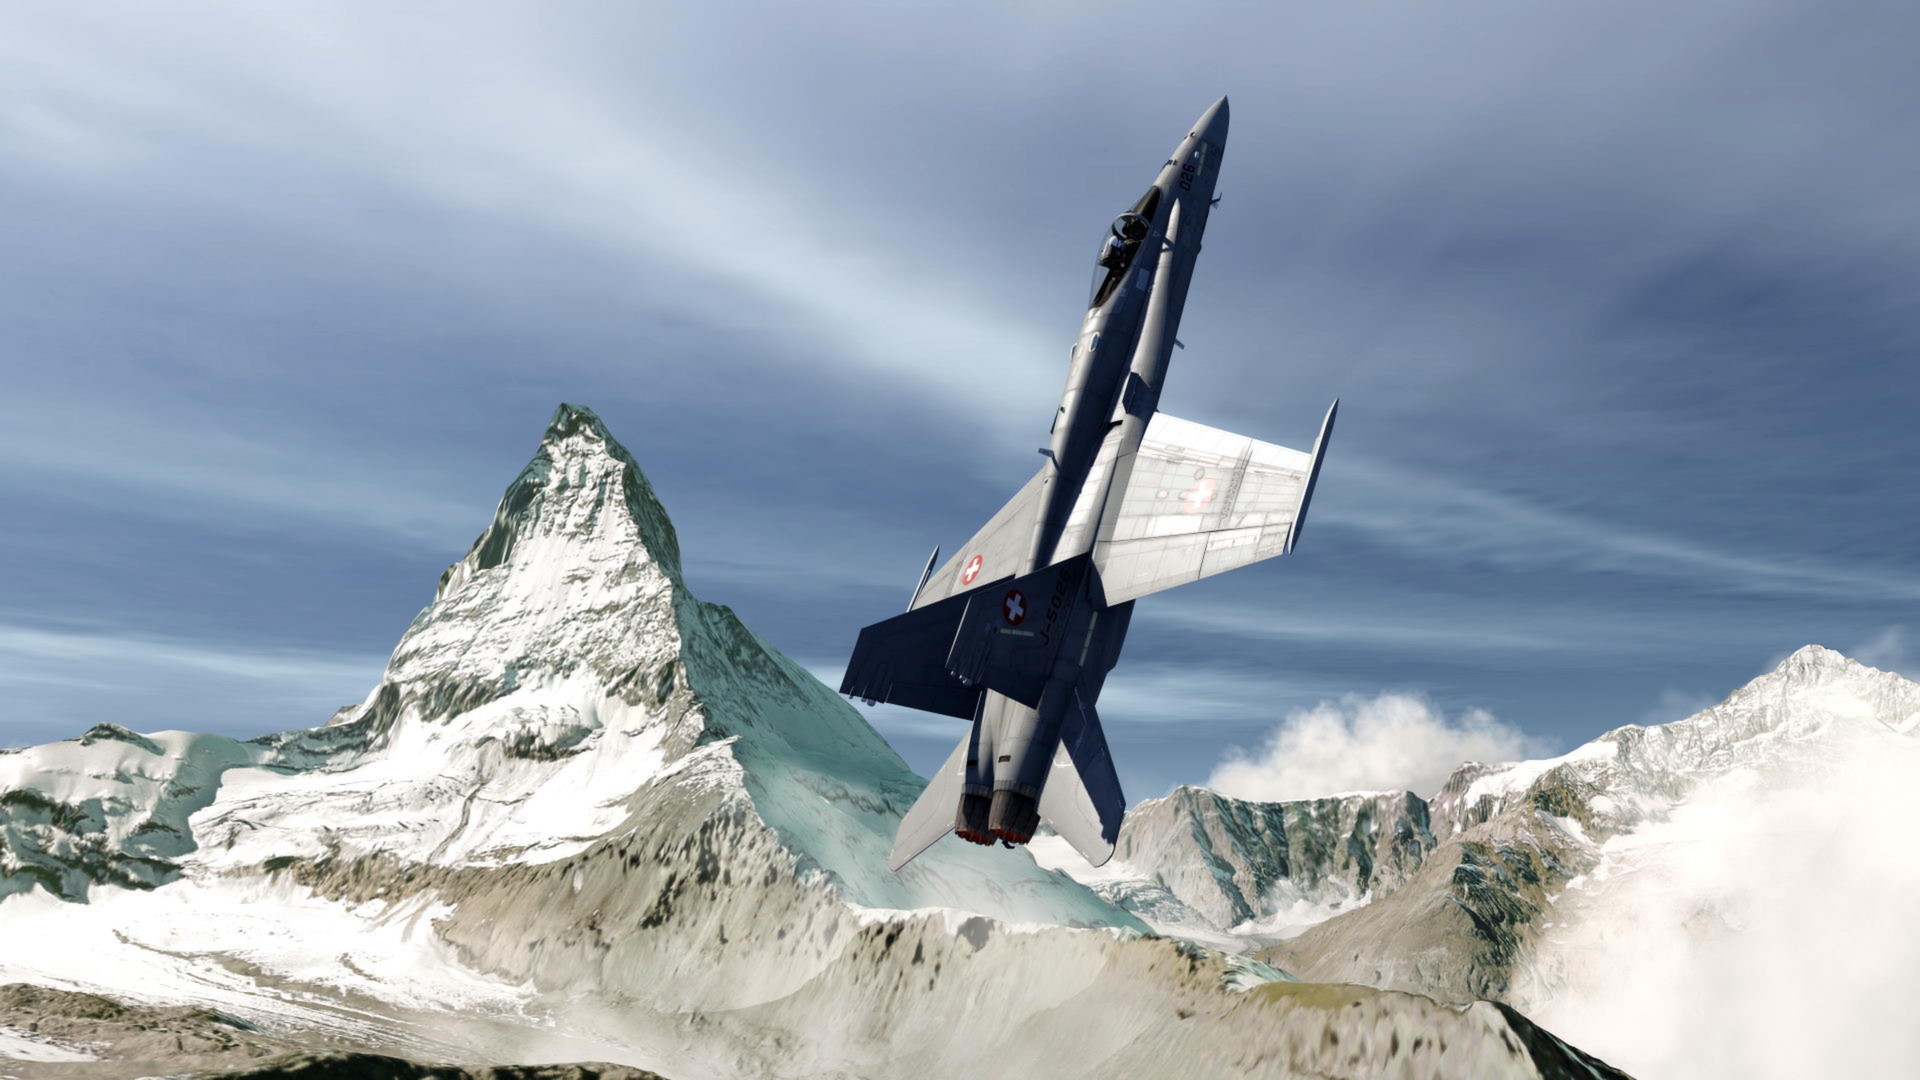 Aerofly FS 1 Flight Simulator Steam Gift 2259.91 $